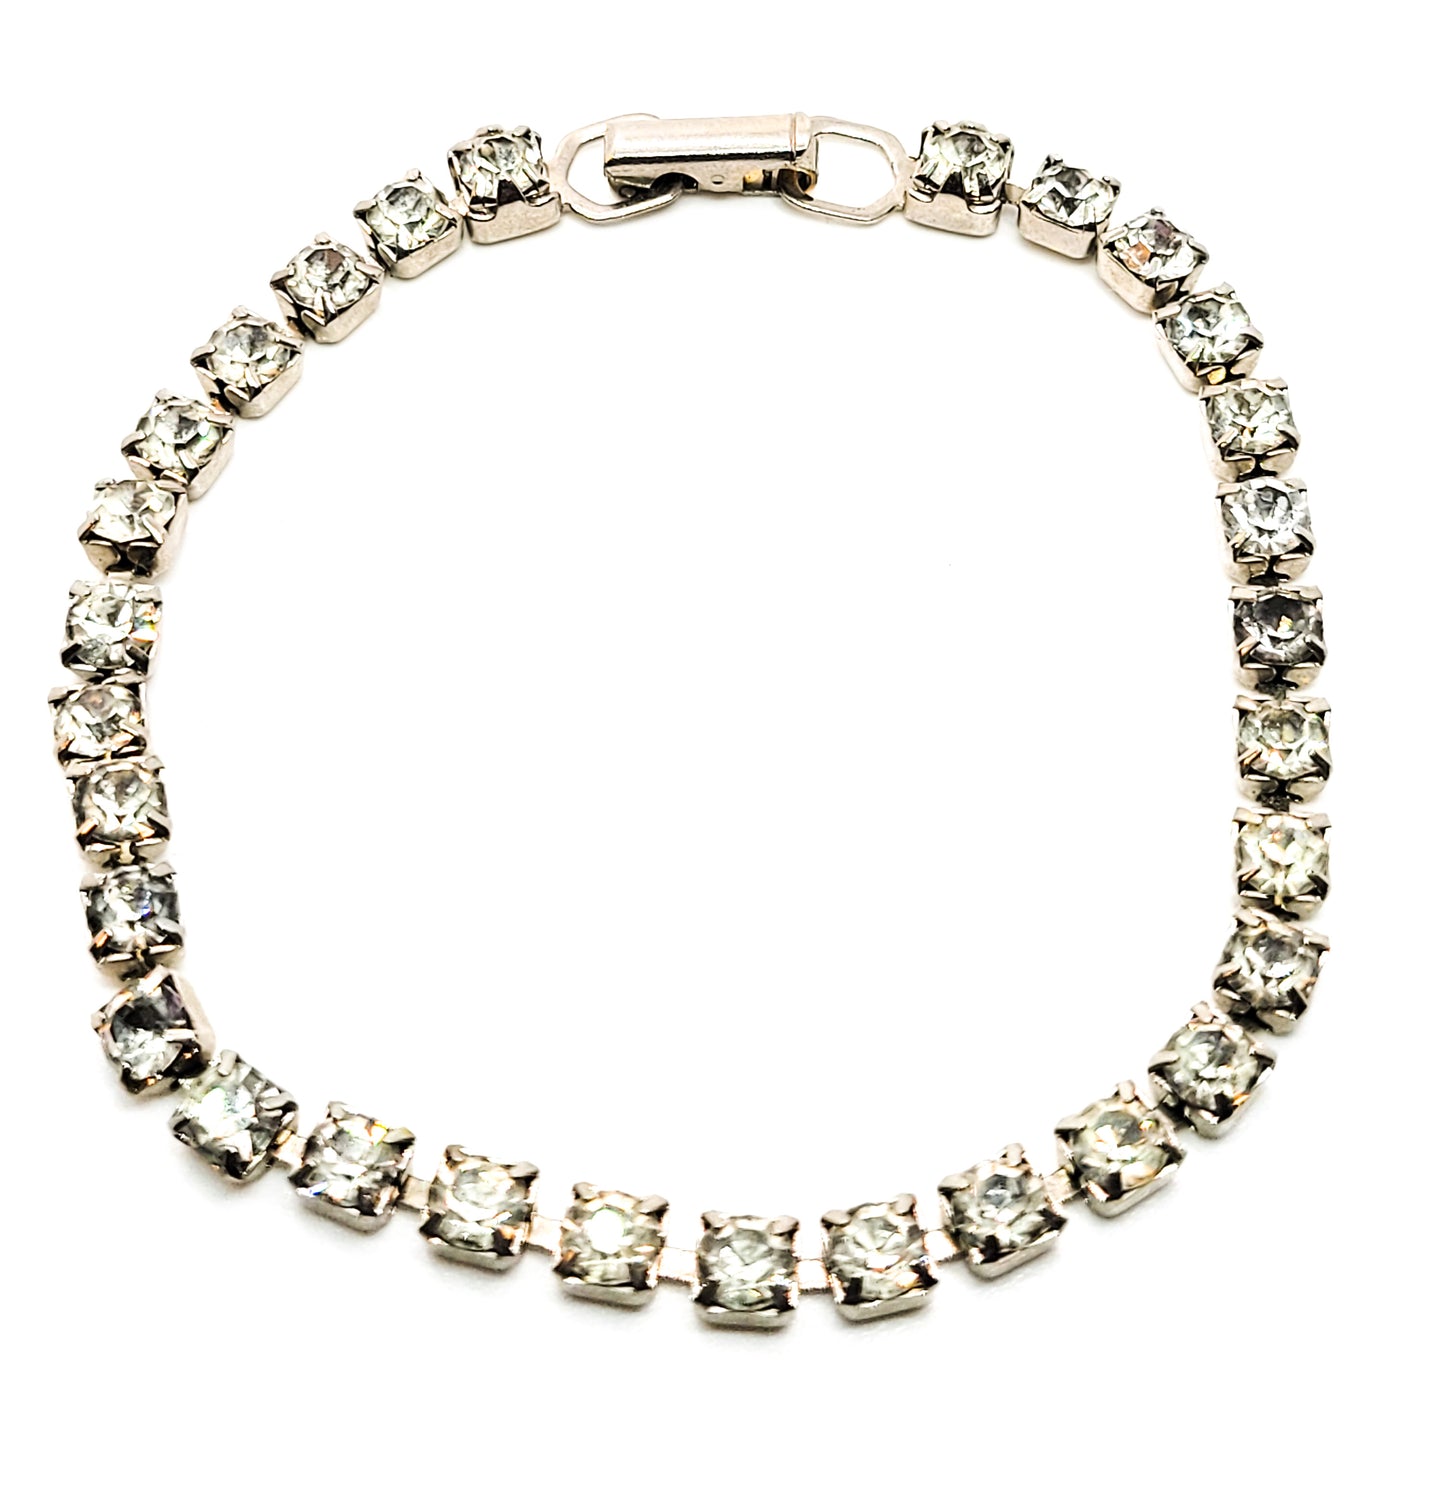 Dainty Single row simple clear silver toned vintage rhinestone tennis bracelet